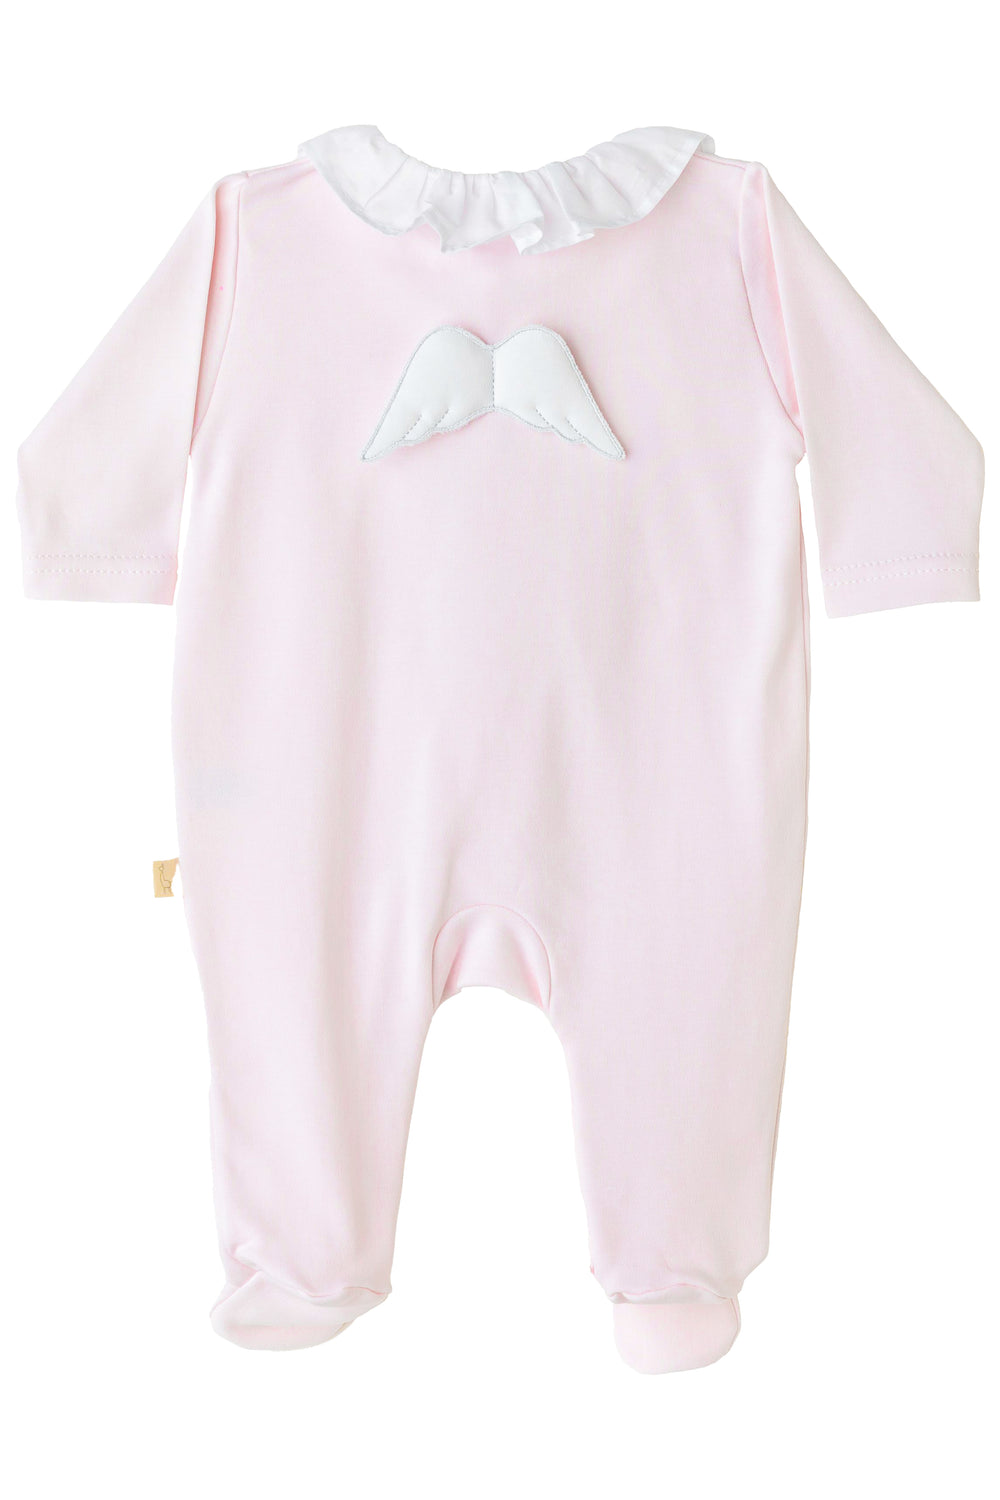 Baby Gi Cotton Angel Wing Ruffle Collar Sleepsuit | Millie and John